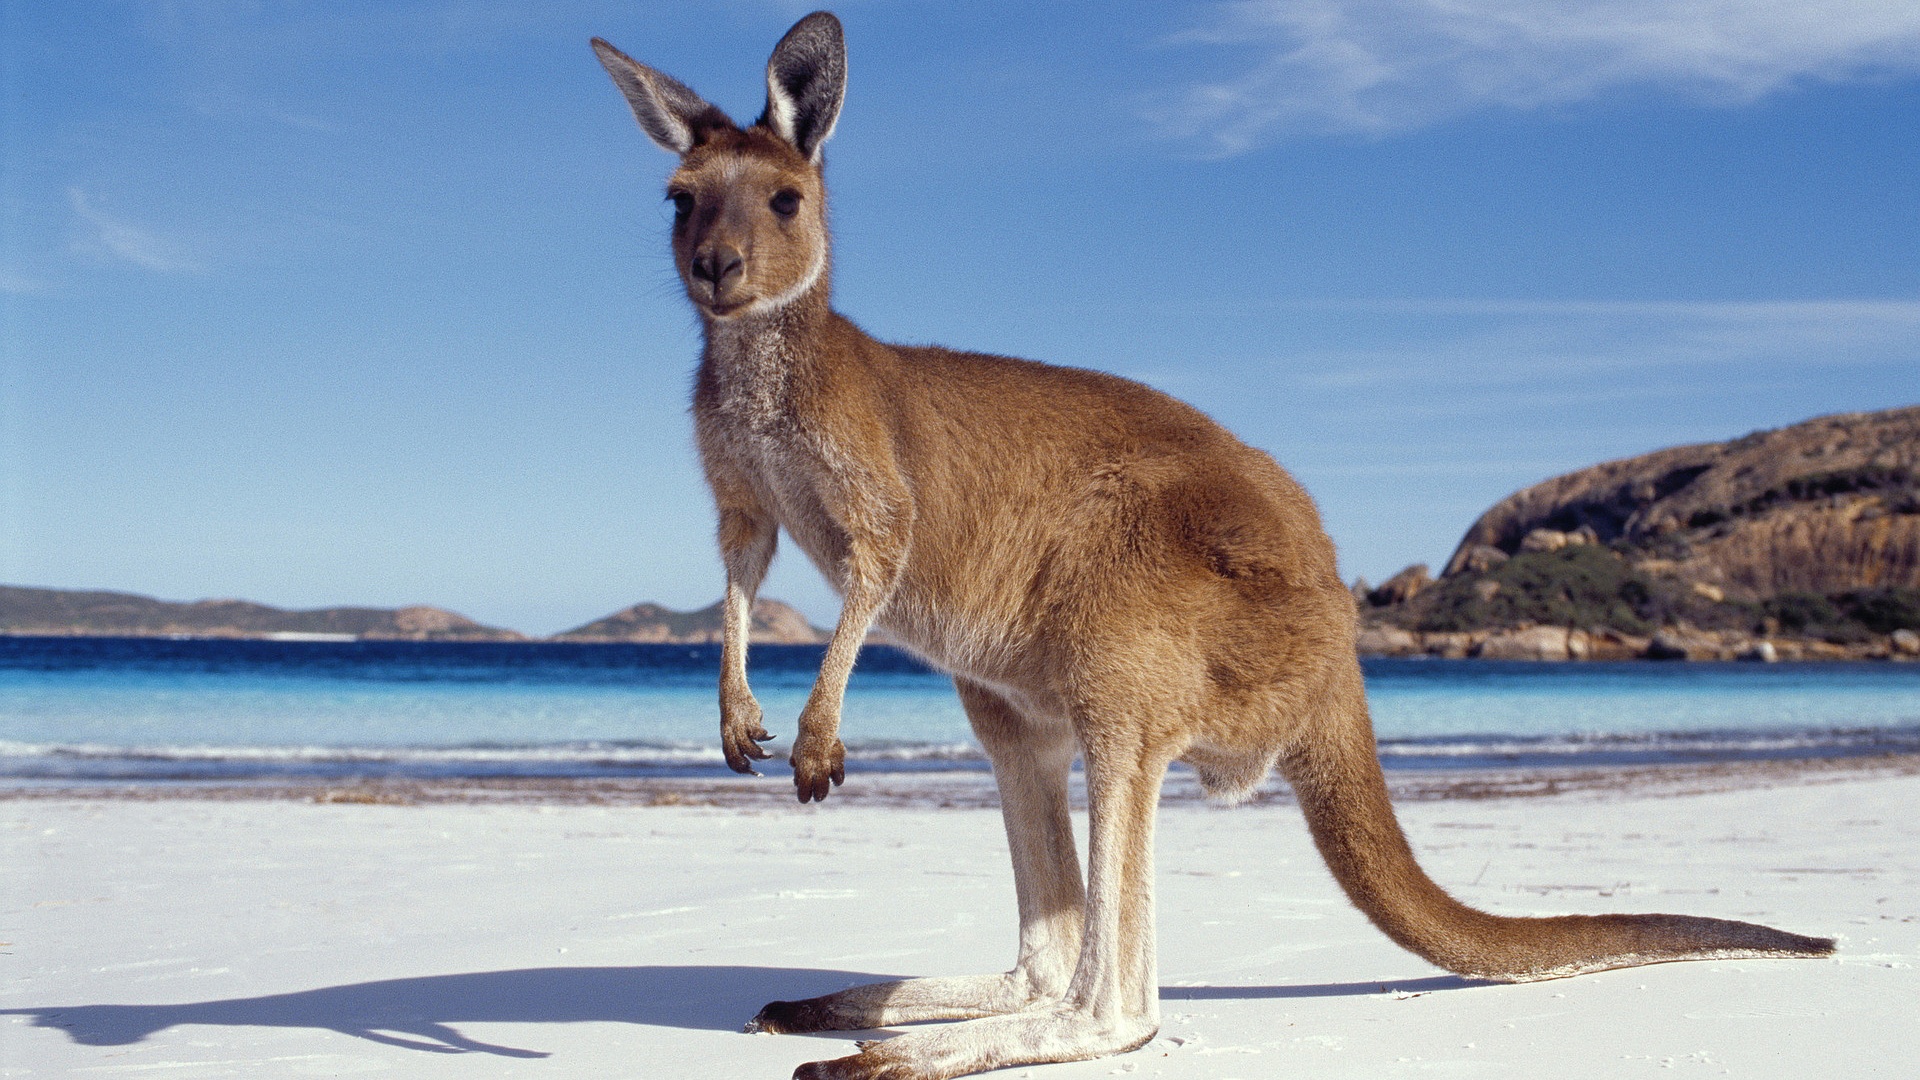 kangaroo images - HD Desktop Wallpapers | 4k HD